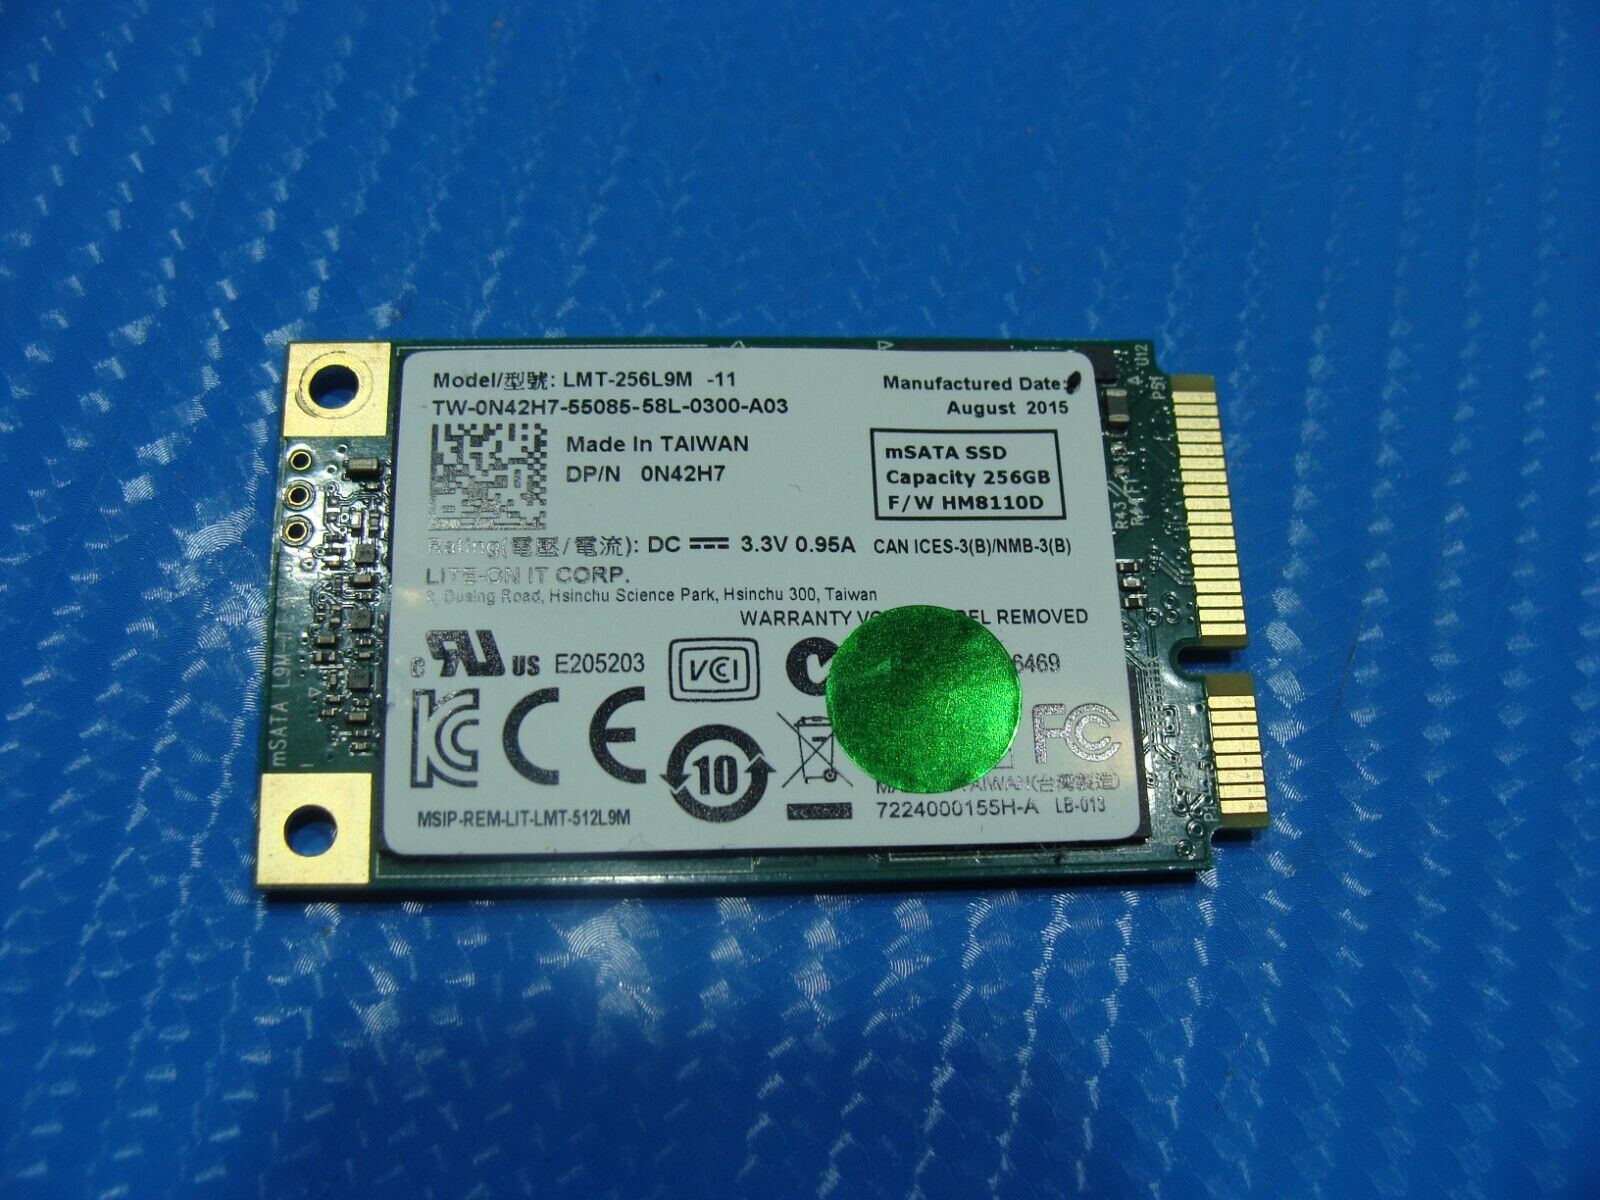 Dell M4800 Lite-On SSD 256GB mSATA Solid State Drive LMT-256L9M-11 N42H7